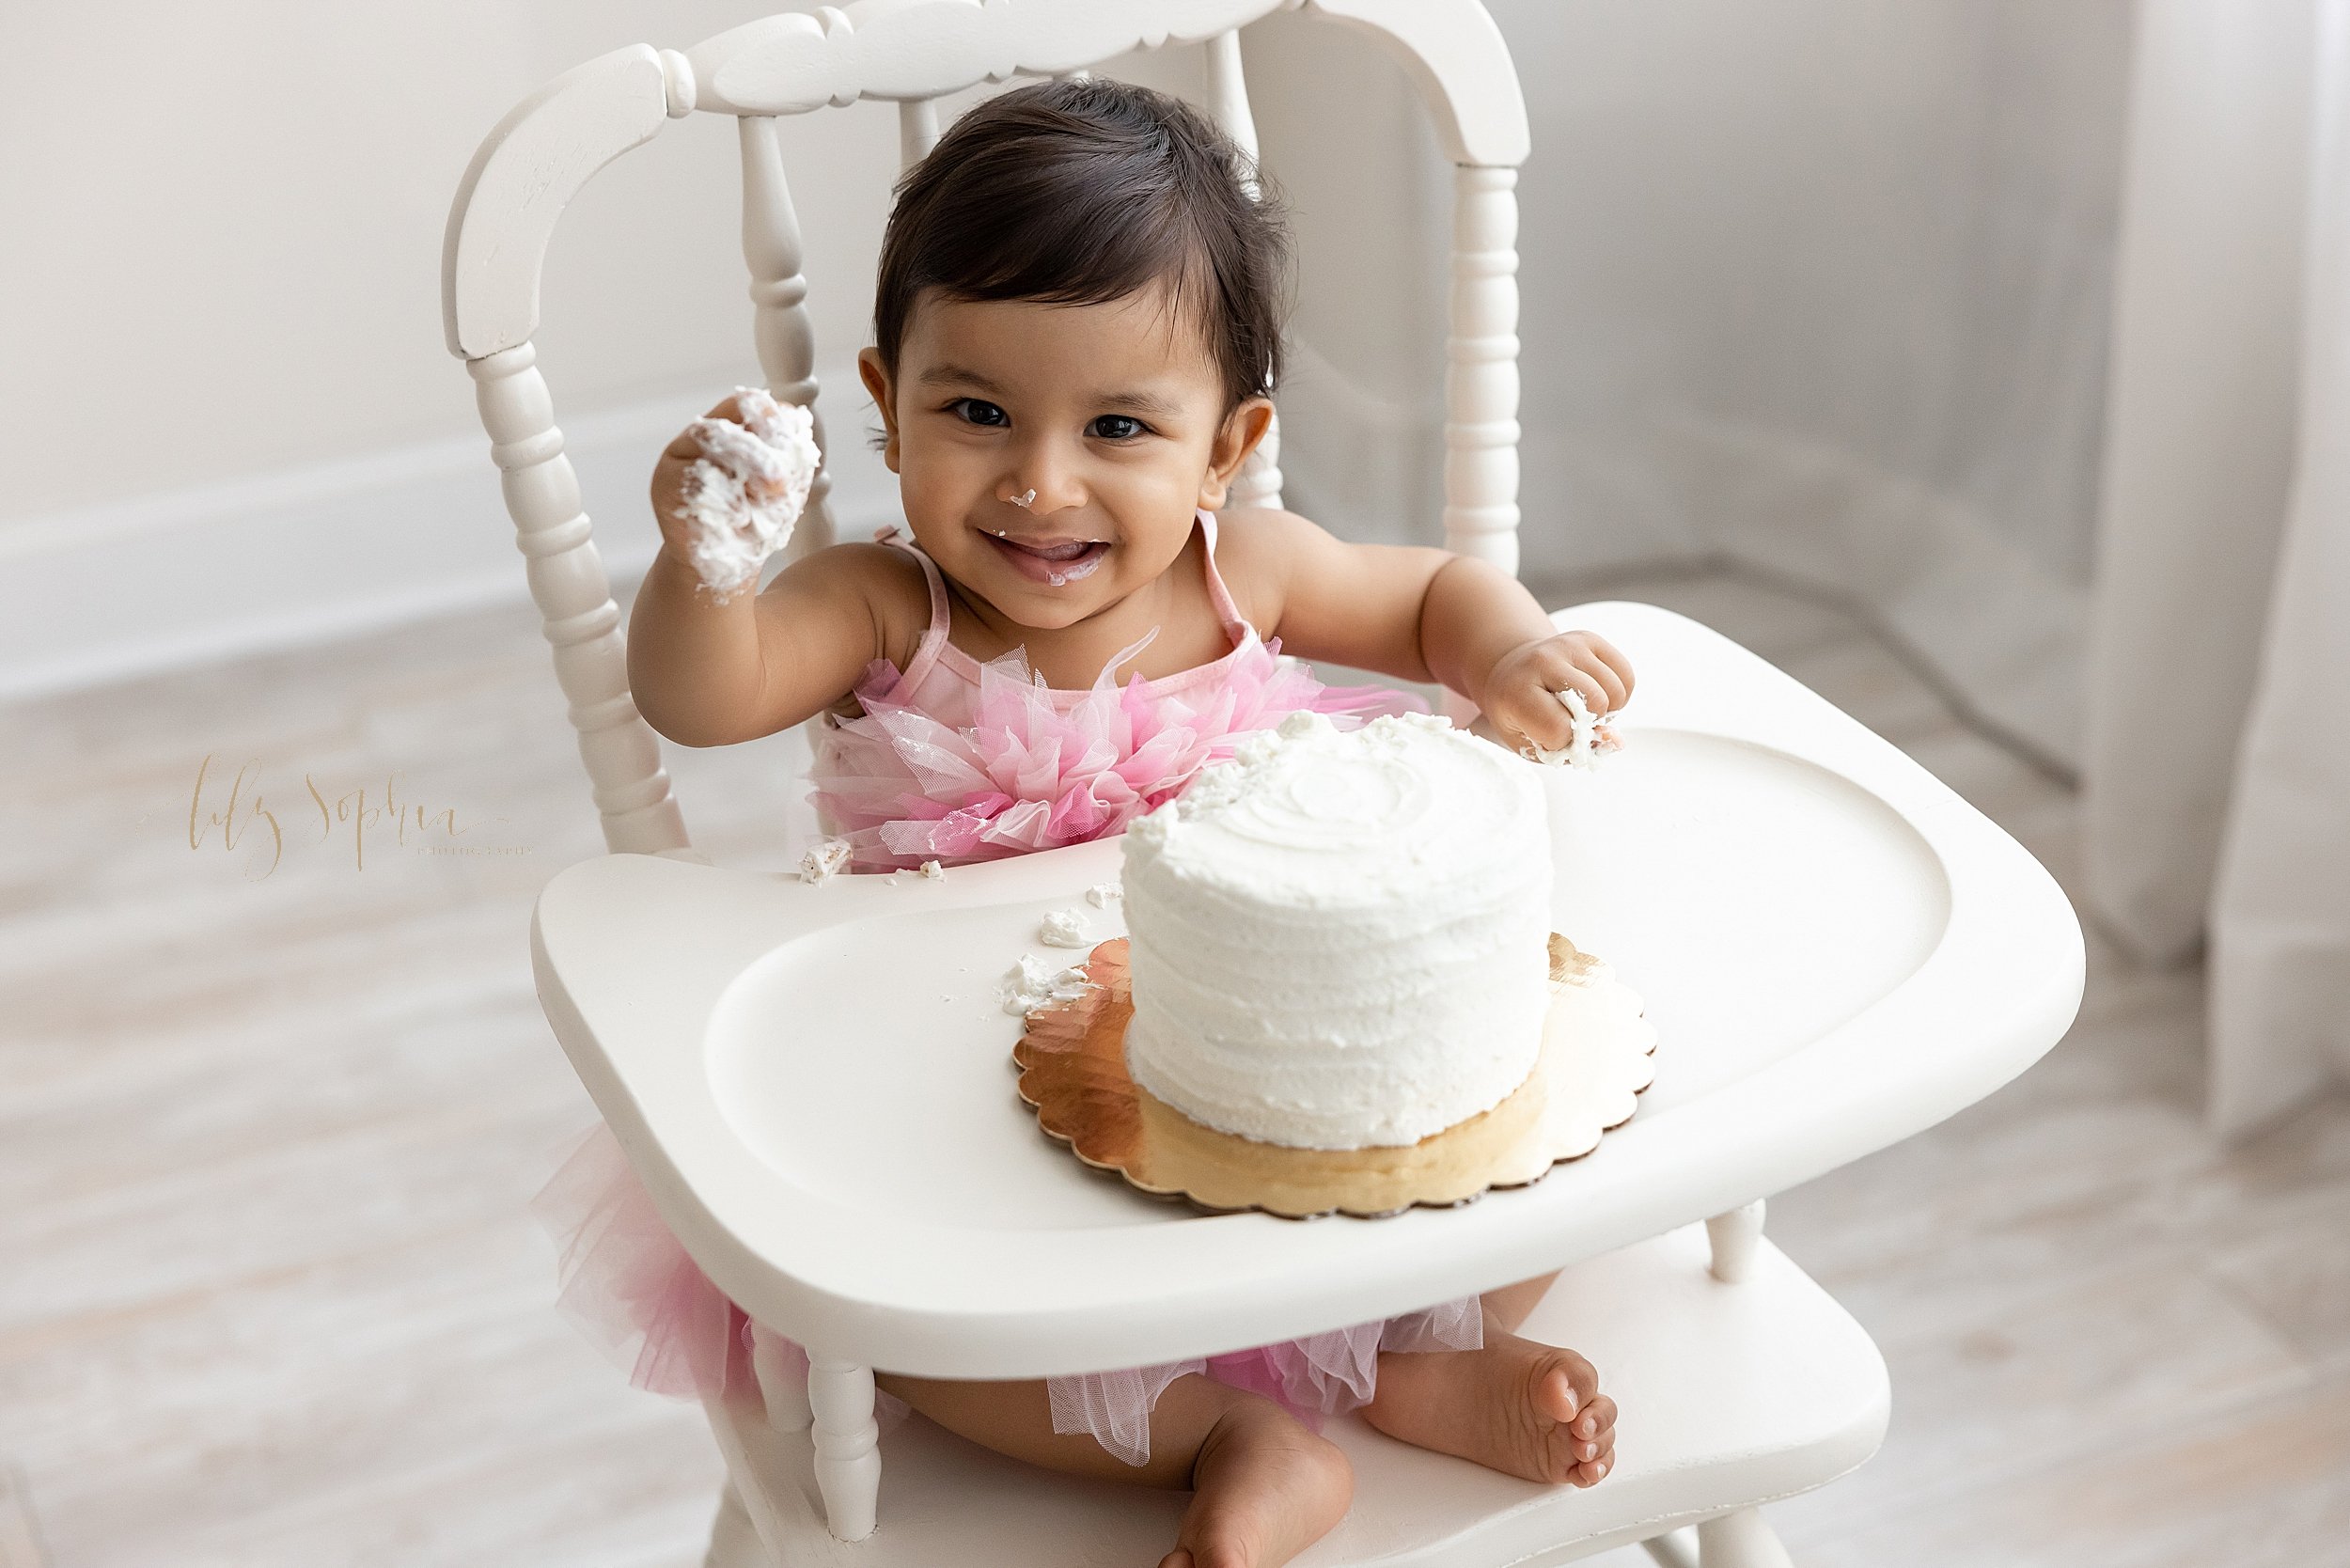 intown-atlanta-grant-park-kirkwood-douglasville-indian-family-baby-girl-first-birthday-cake-smash-photos_1457.jpg